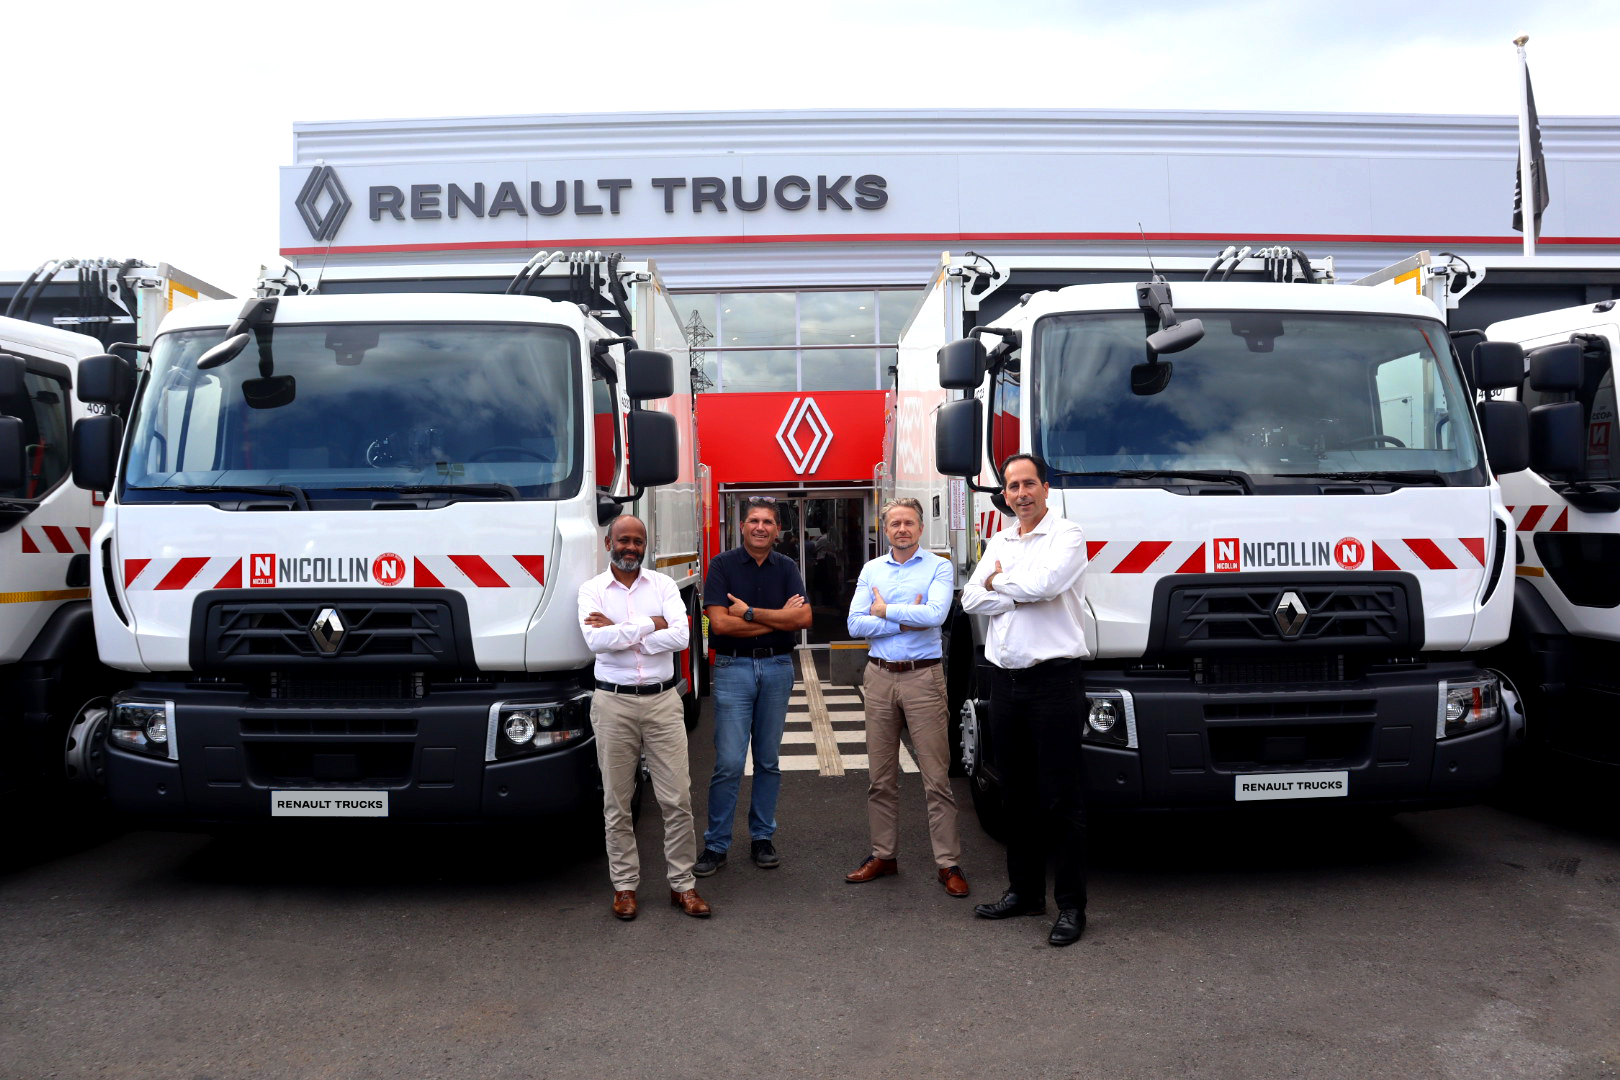 dirigeant_renault_trucks_réunis_nicollin_partenariat_collaboration